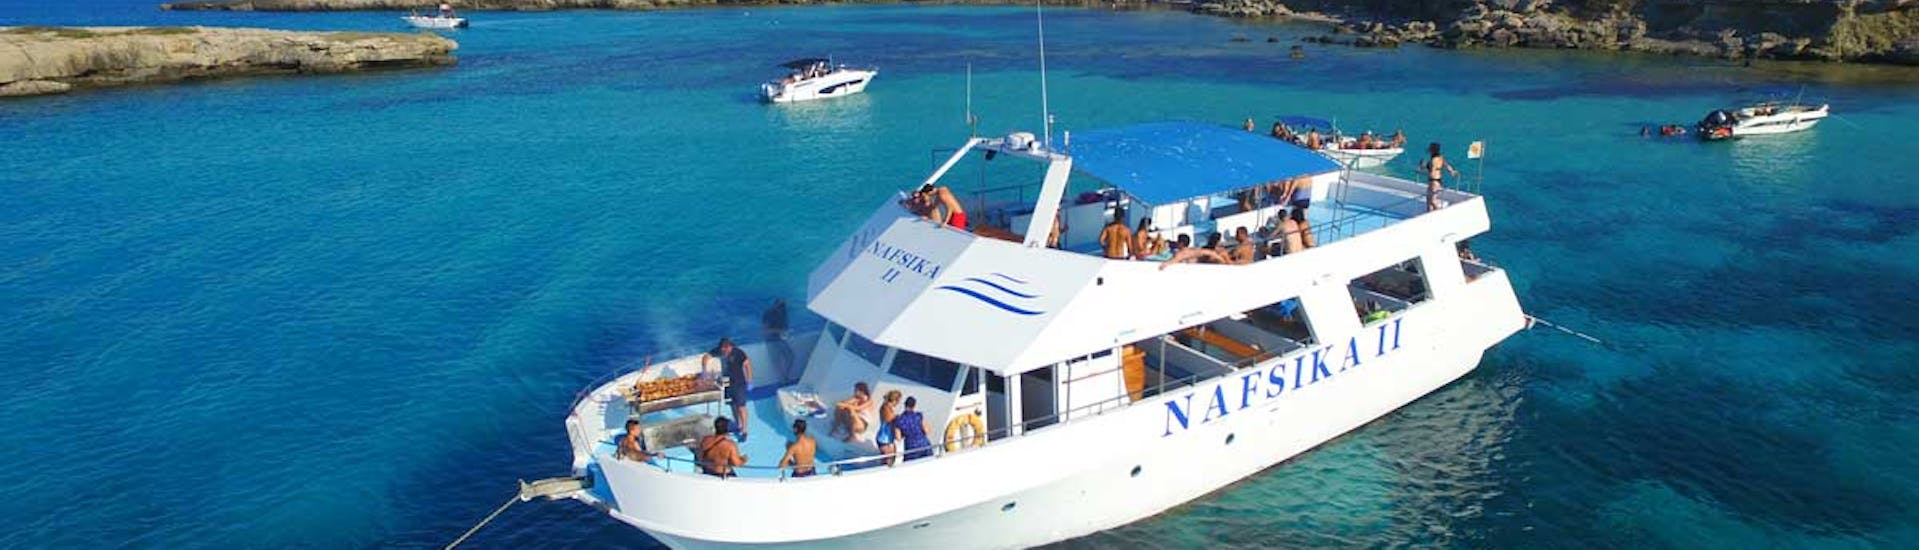 Nafsika II on its way to the Blue Lagoon.